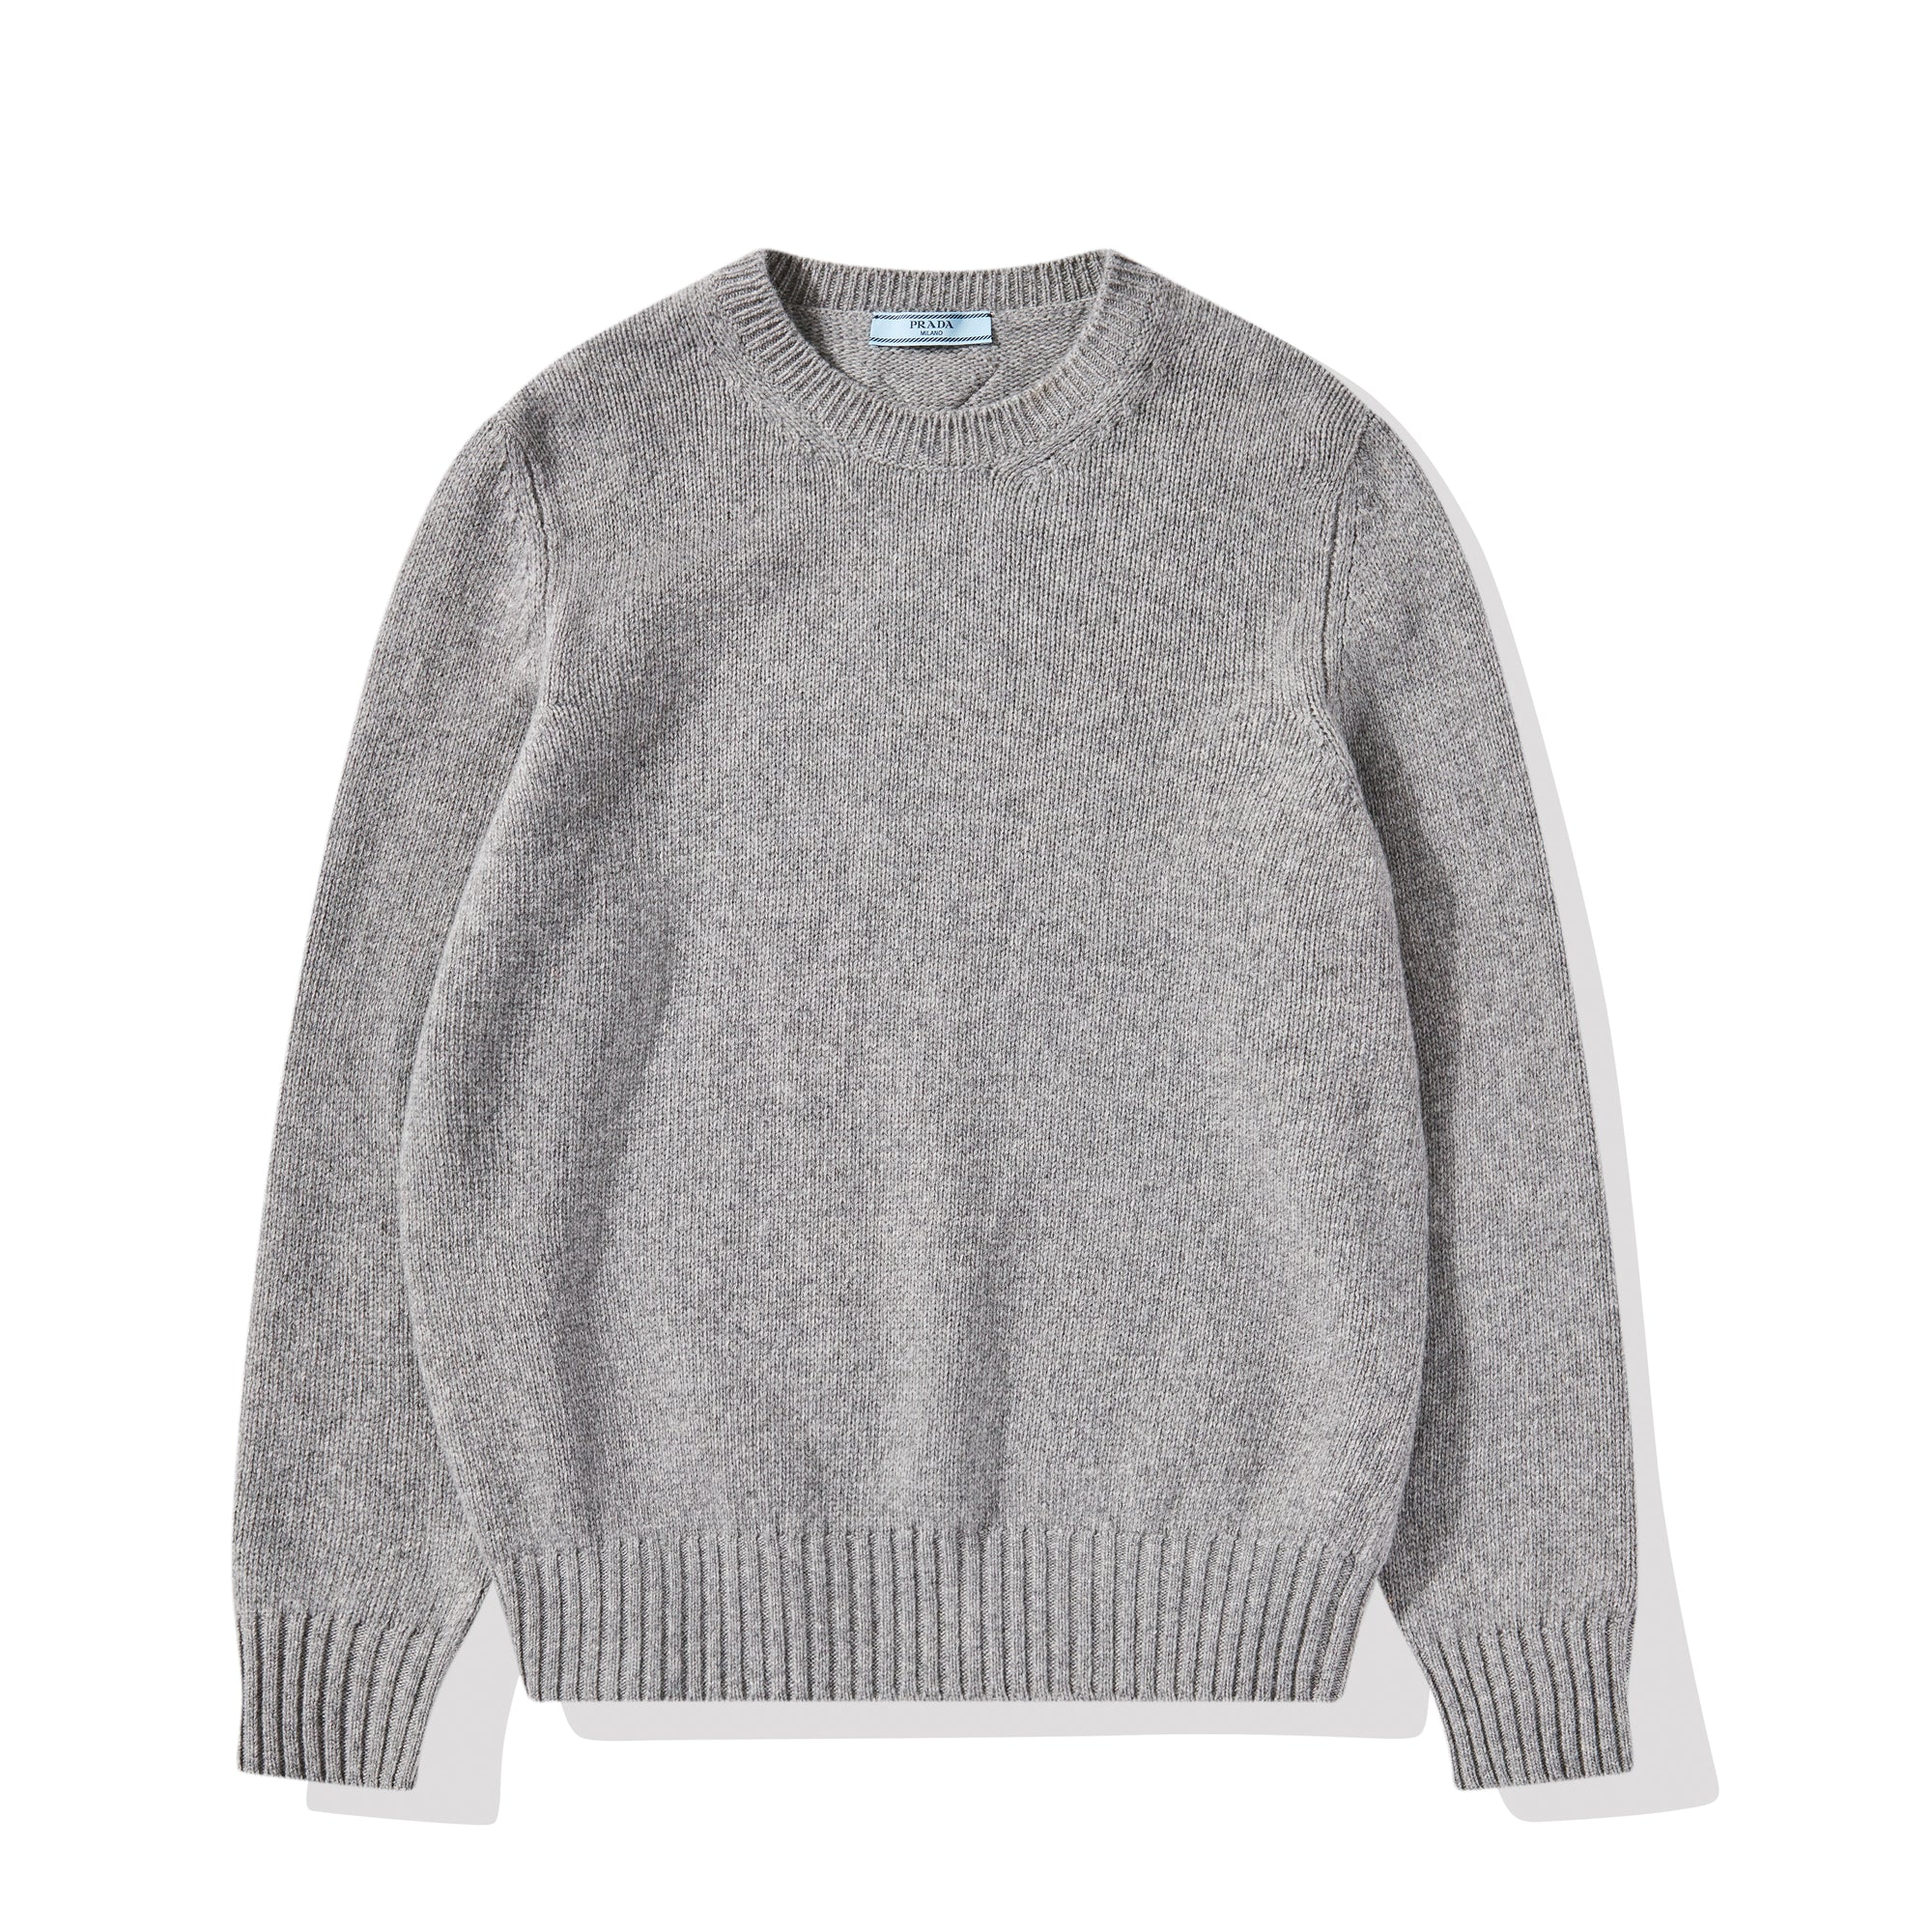 Prada - Women’s Wool and Cashmere Crew-Neck Sweater - (Grey) view 5